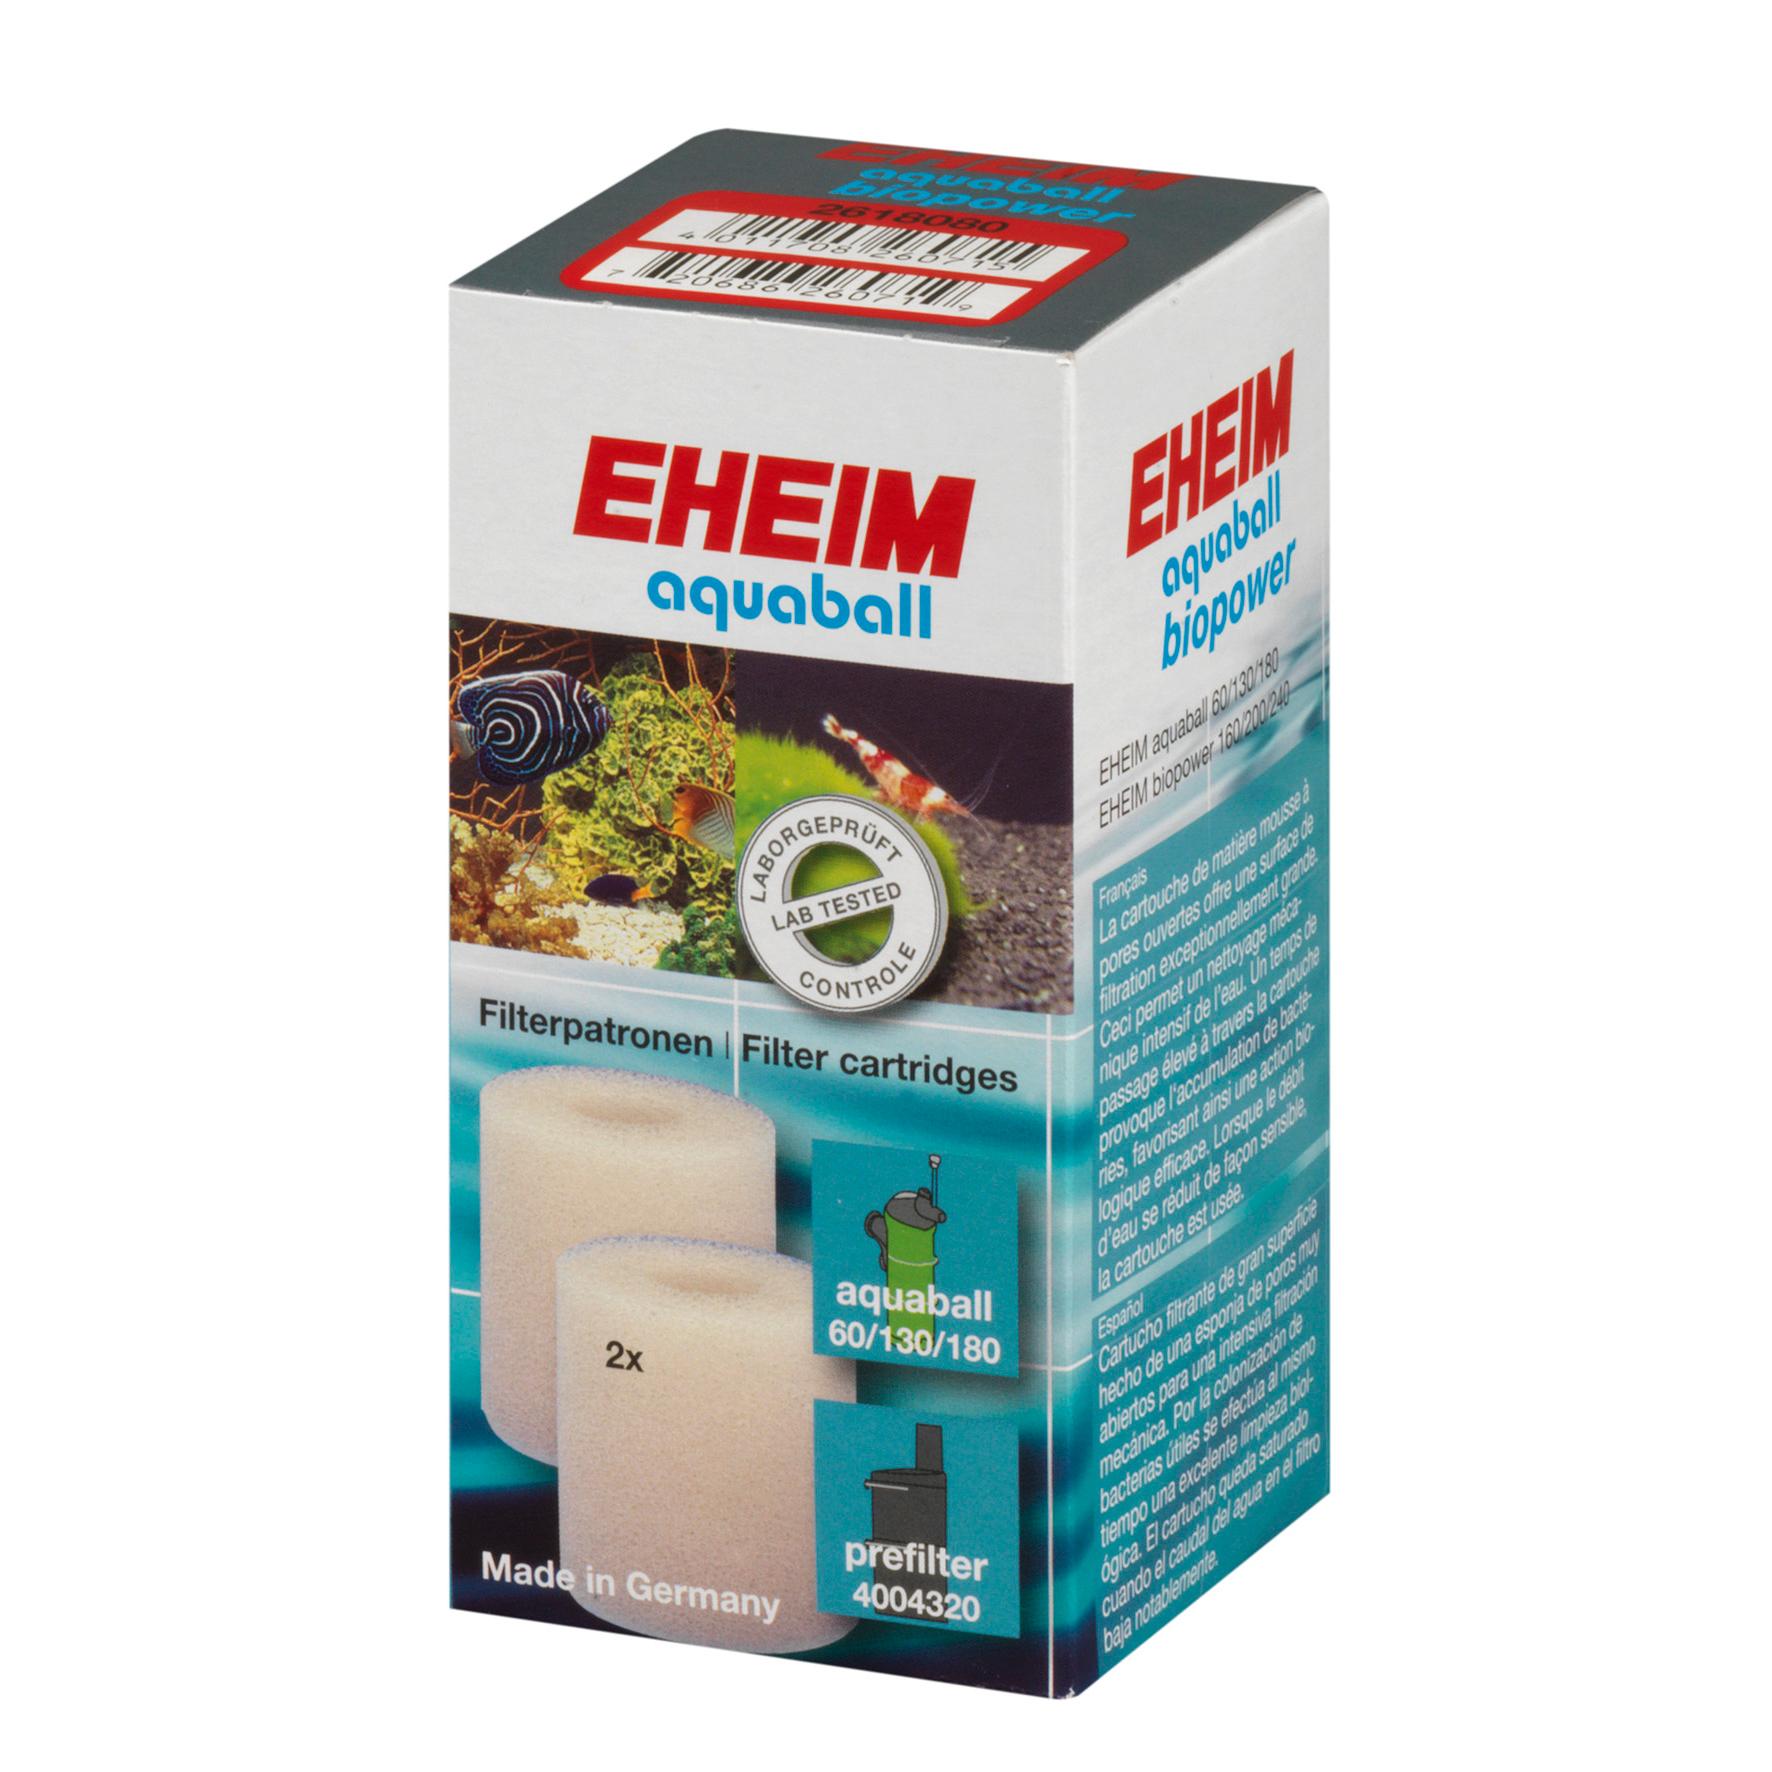 EHEIM Filterpatrone (2 Stück) für Innenfilter Eheim aquaball